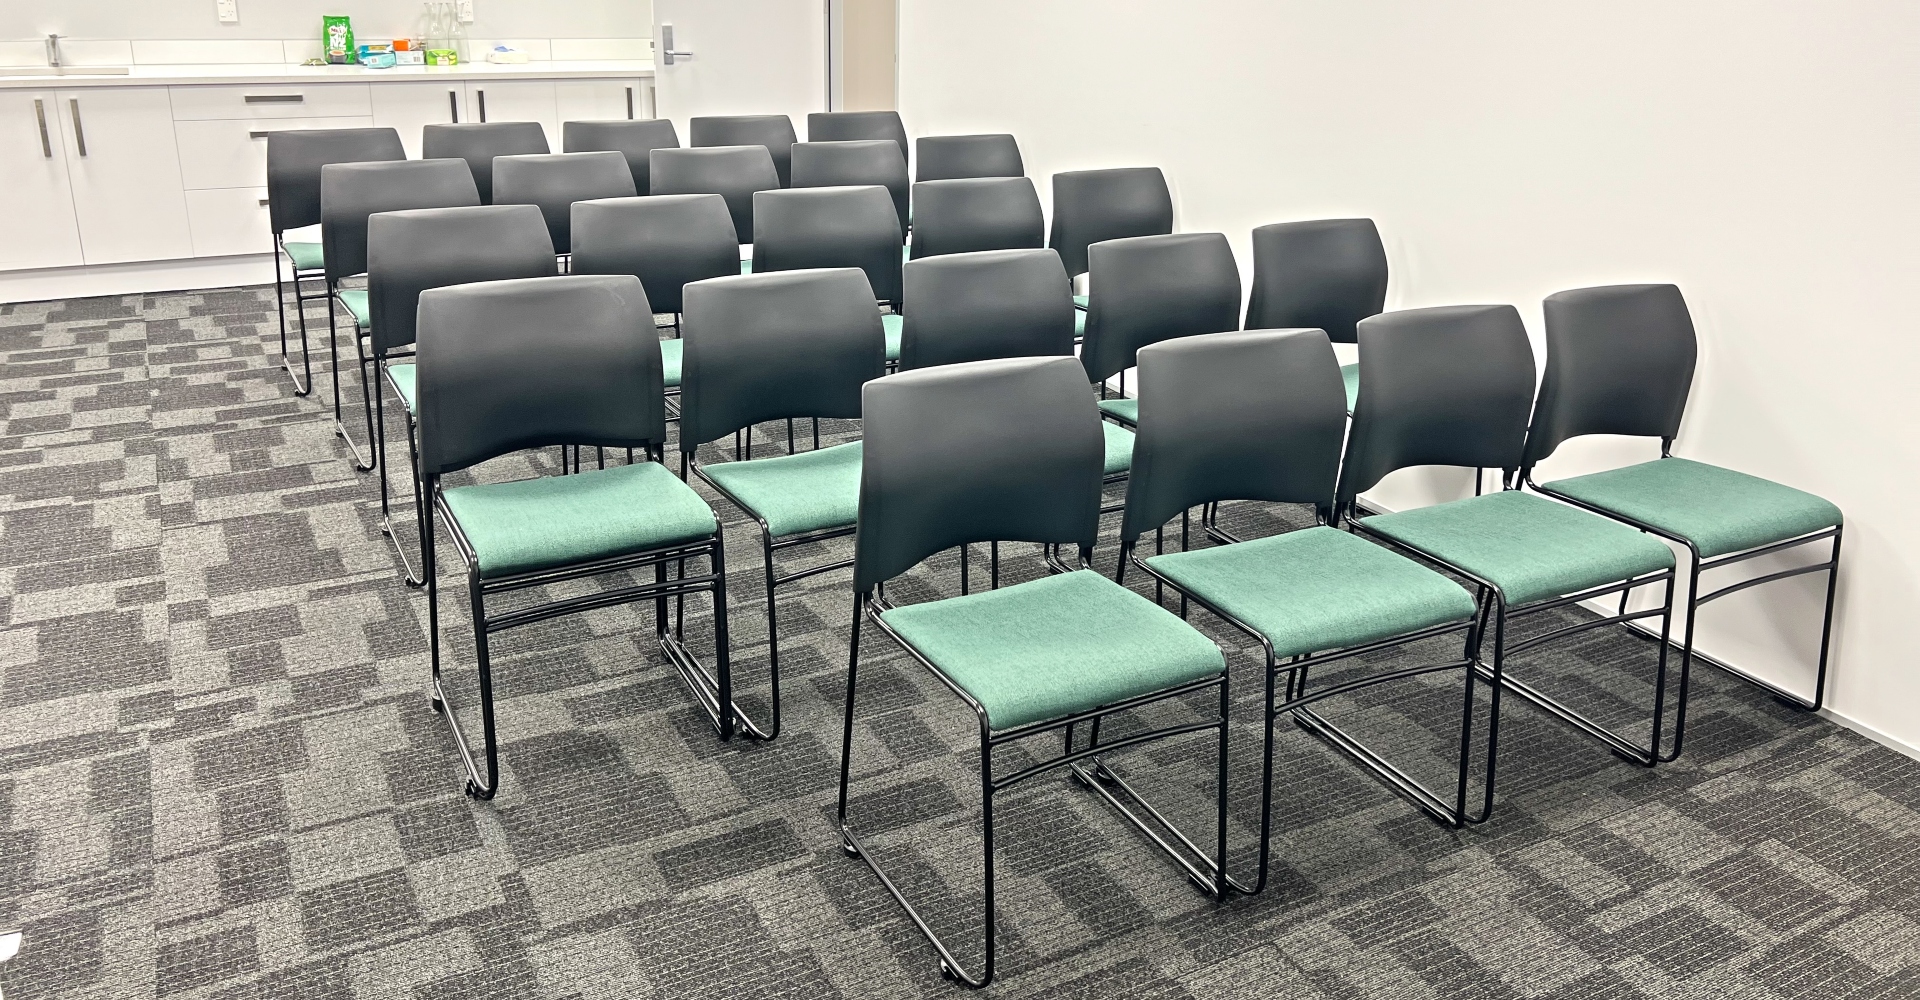 CW-Meeting-Room-Chairs